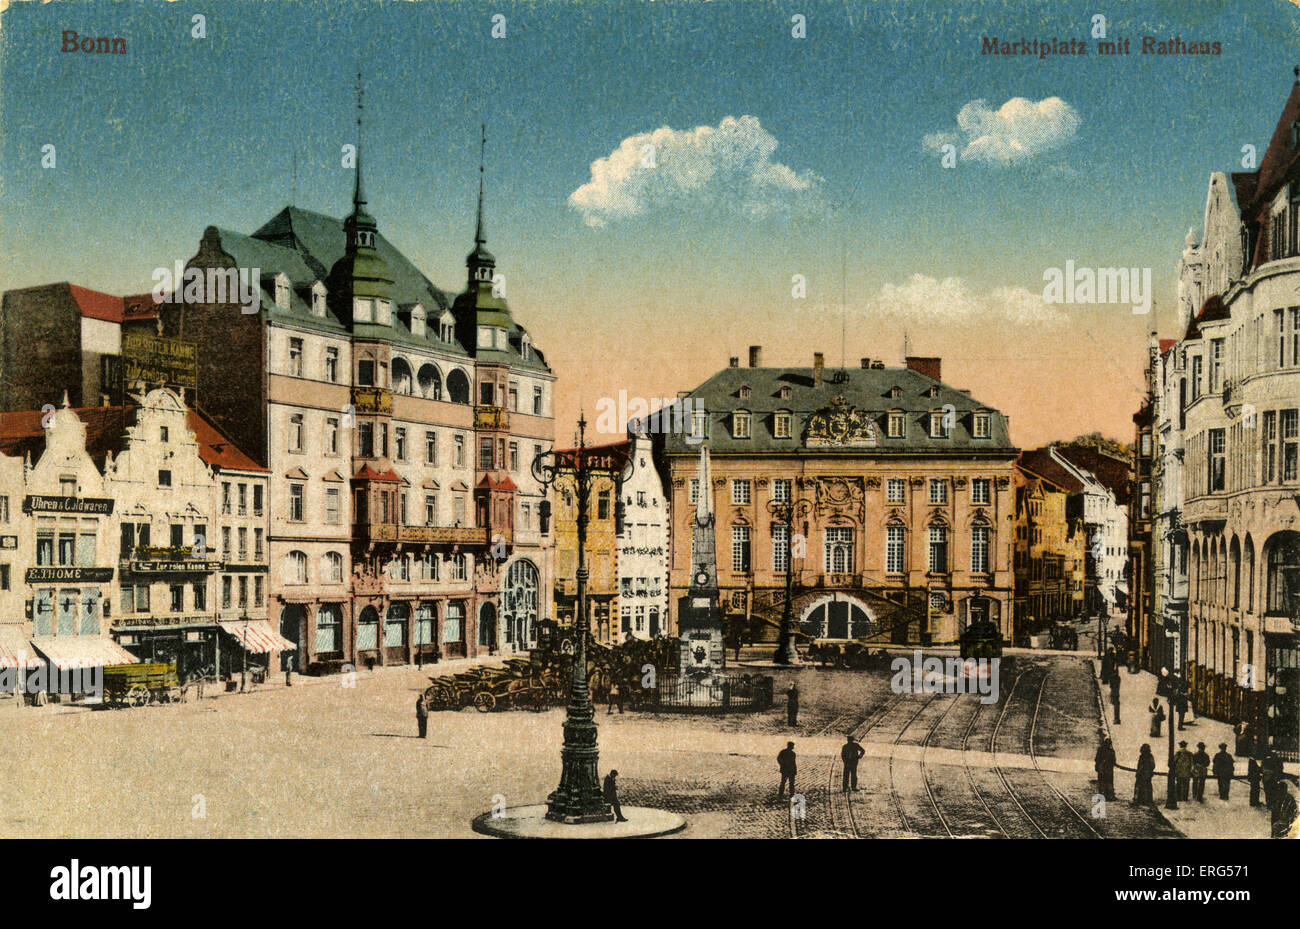 Bonn, Germany: Markipiatz mit Rathaus (Marketplace with town hall) Postcard. Stock Photo